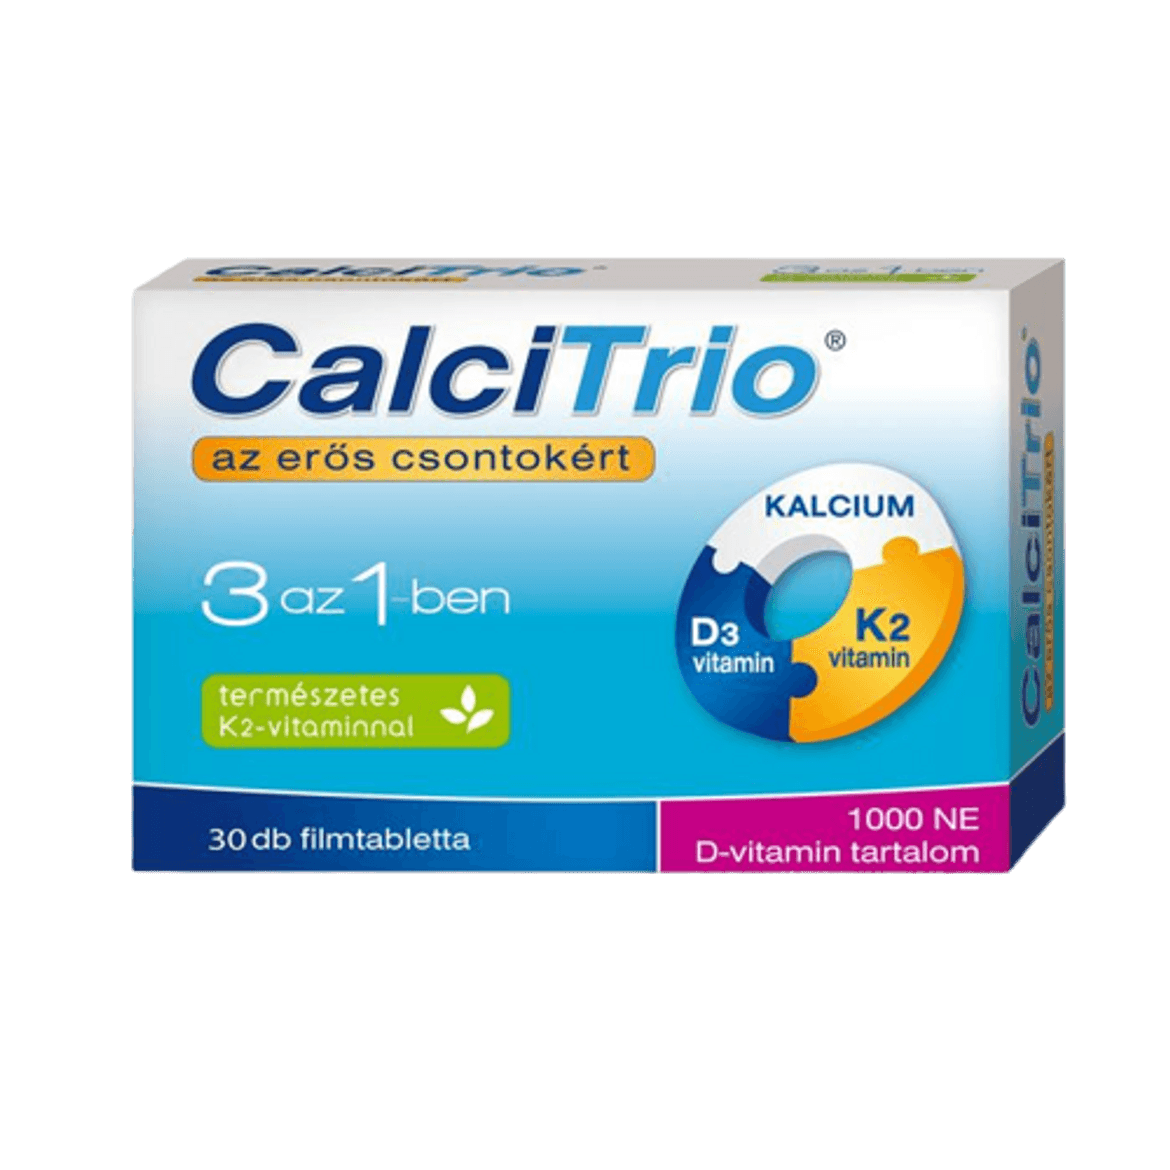 Calcitrio 3 Az 1-ben filmtabletta